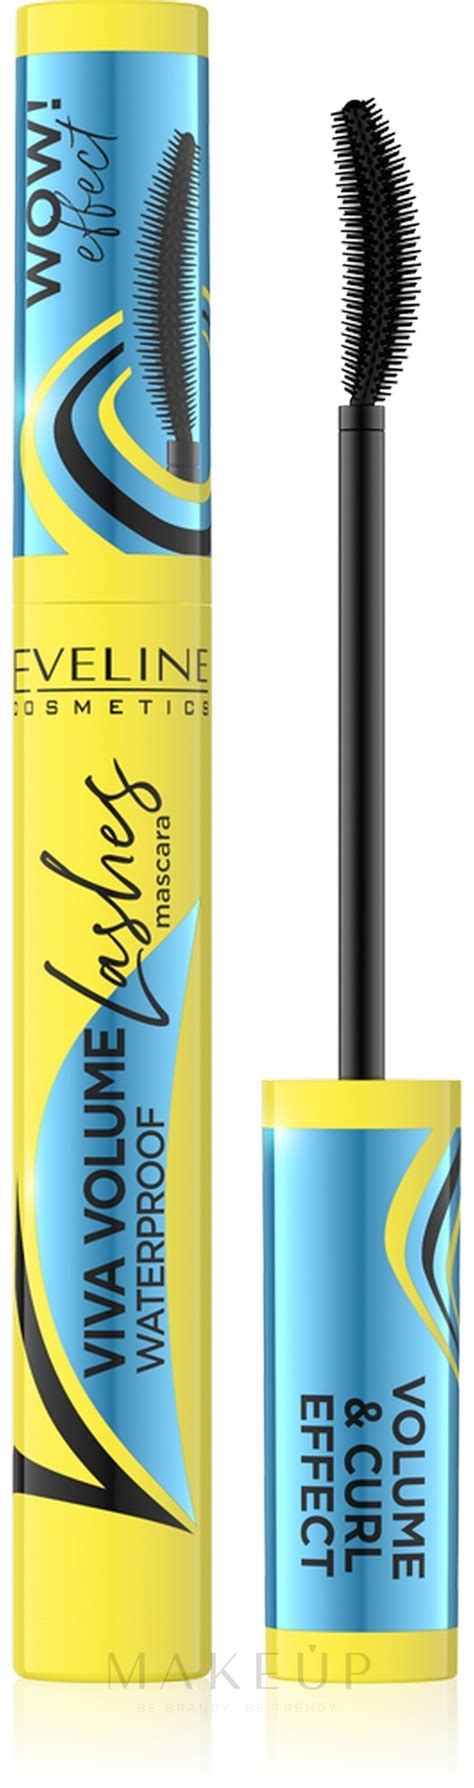 eveline cosmetics viva volume waterproof mascara waterproof mascara makeup